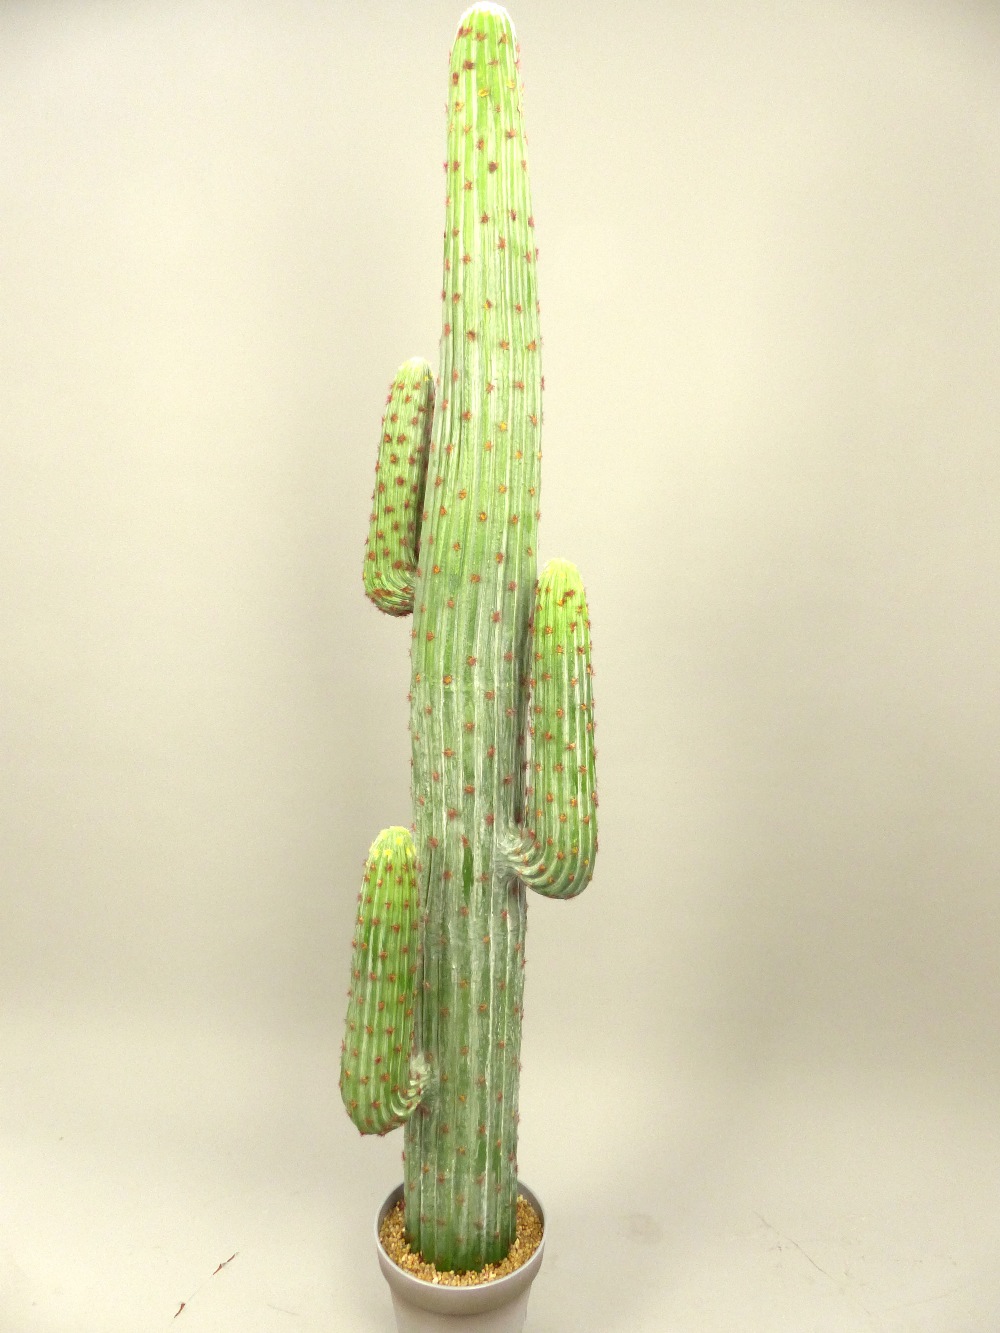 Ornamental desert cactus, 170cm h - Image 4 of 7